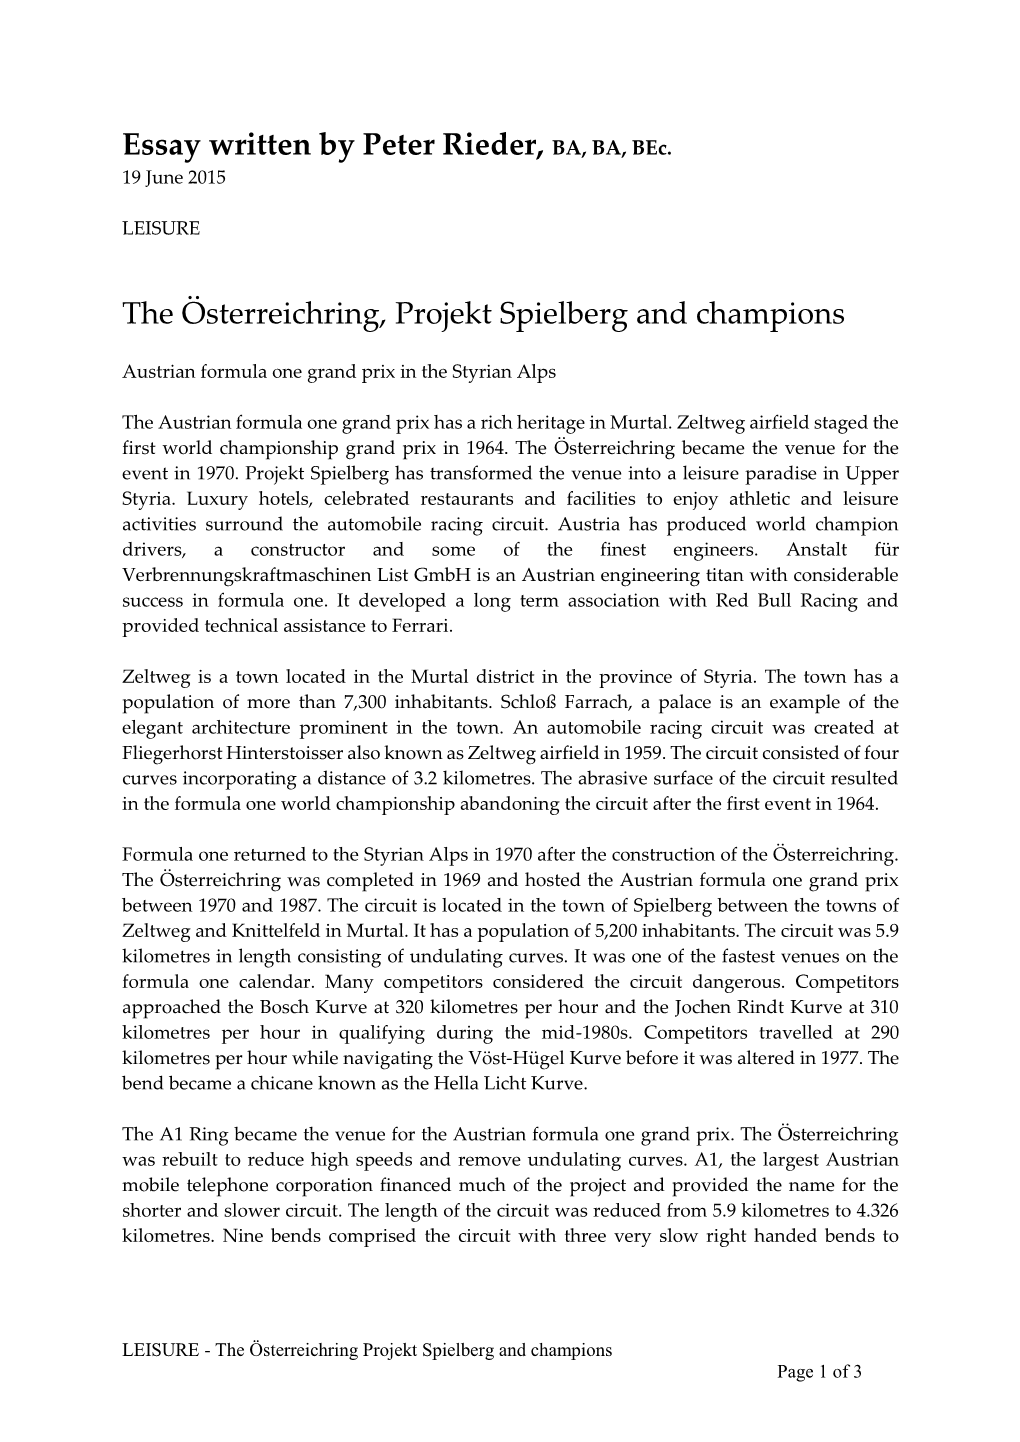 Essay Written by Peter Rieder, BA, BA, Bec. the Österreichring, Projekt Spielberg and Champions